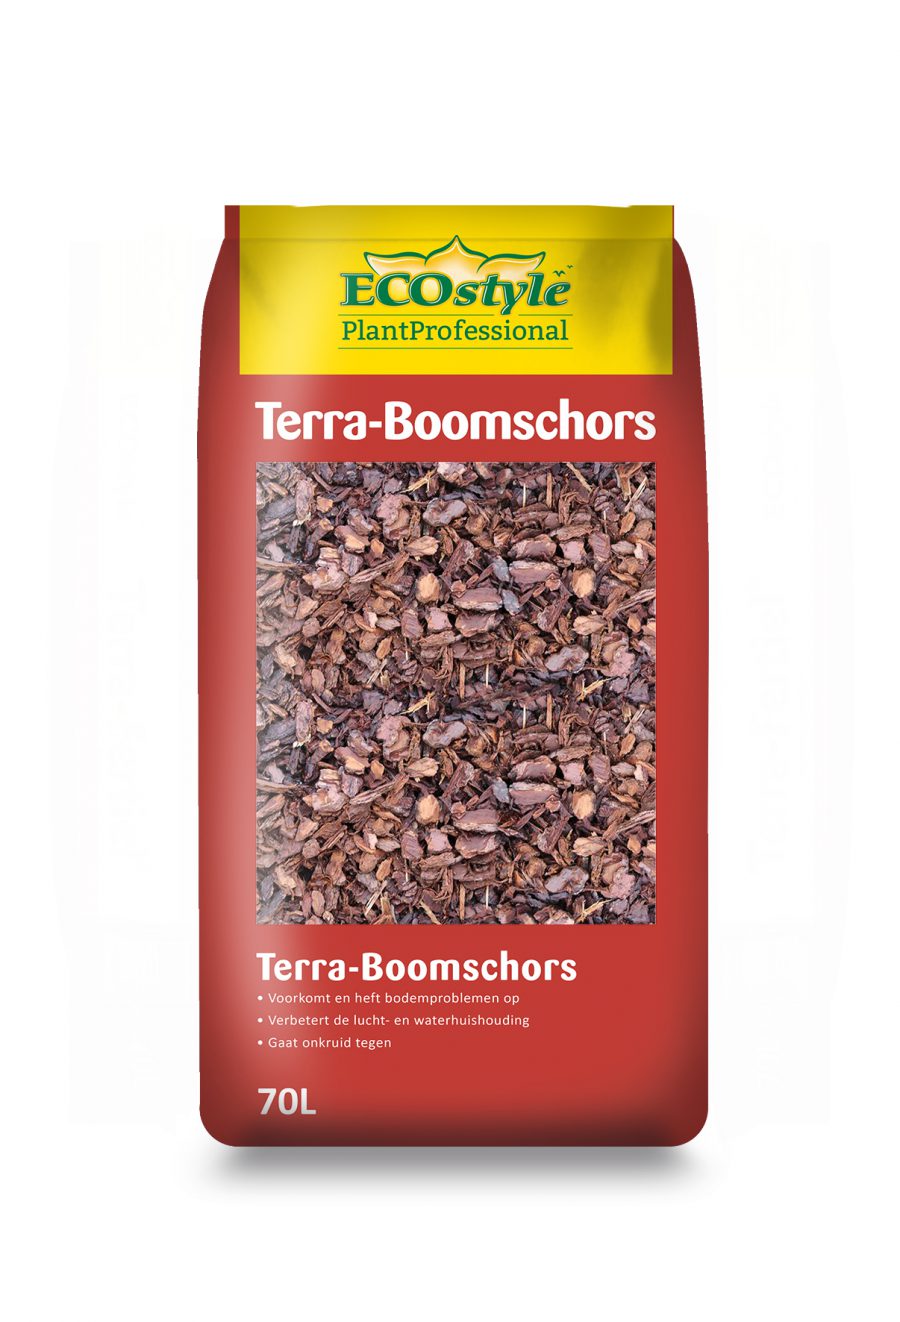 ECOstyle Terra-Boomschors 70L